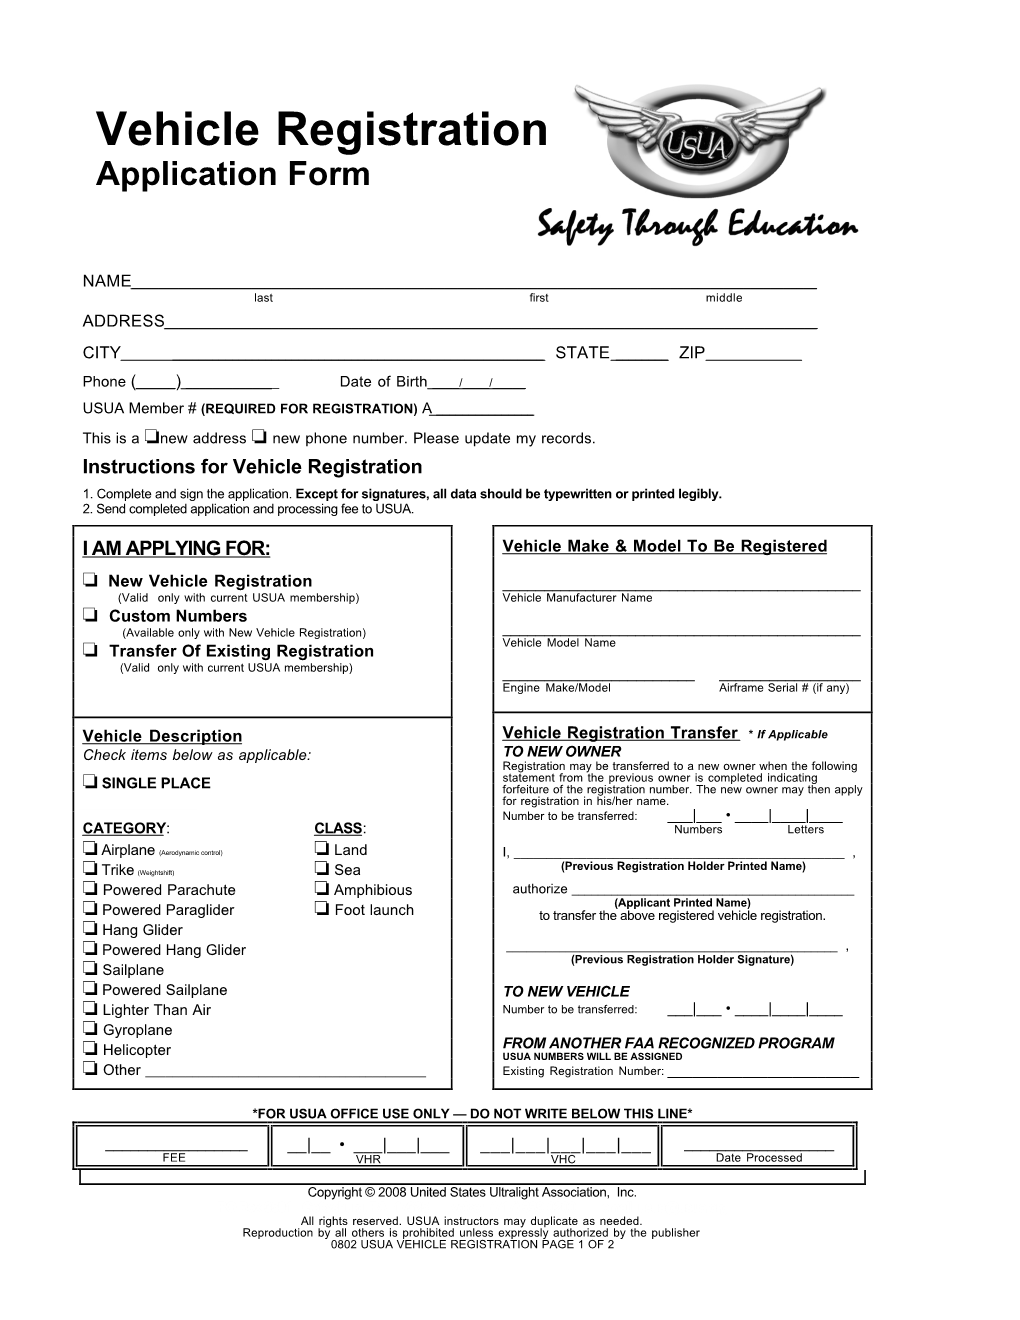 Vehicle Registration Application Form